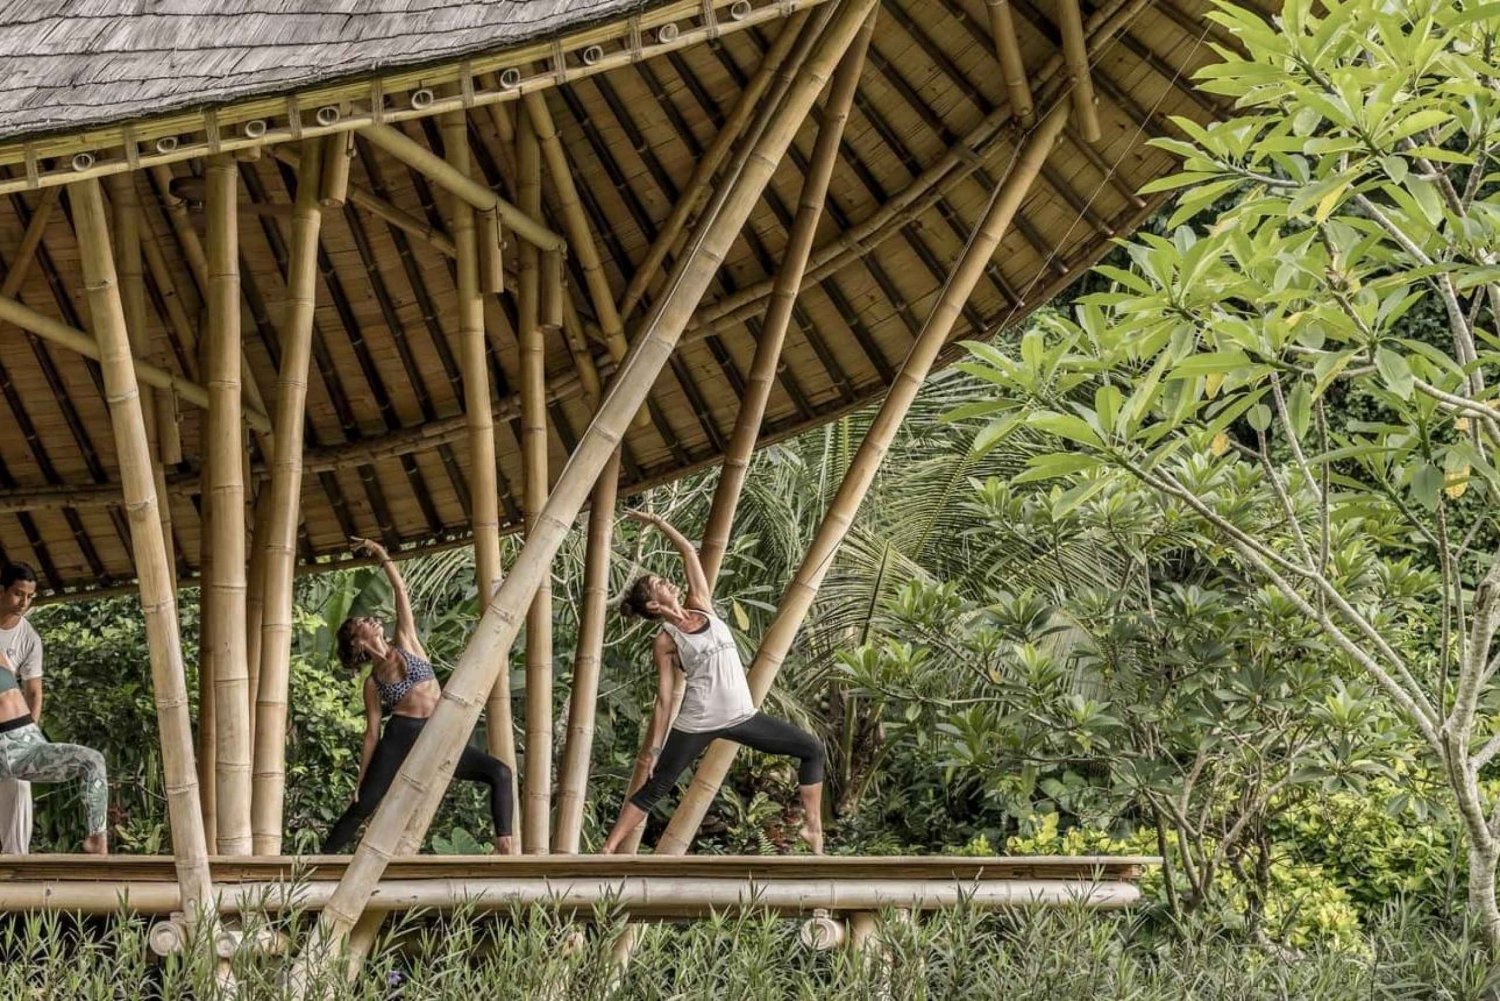 Ubud: Wellness Retreat with Massage, Yoga Class, and Lunch